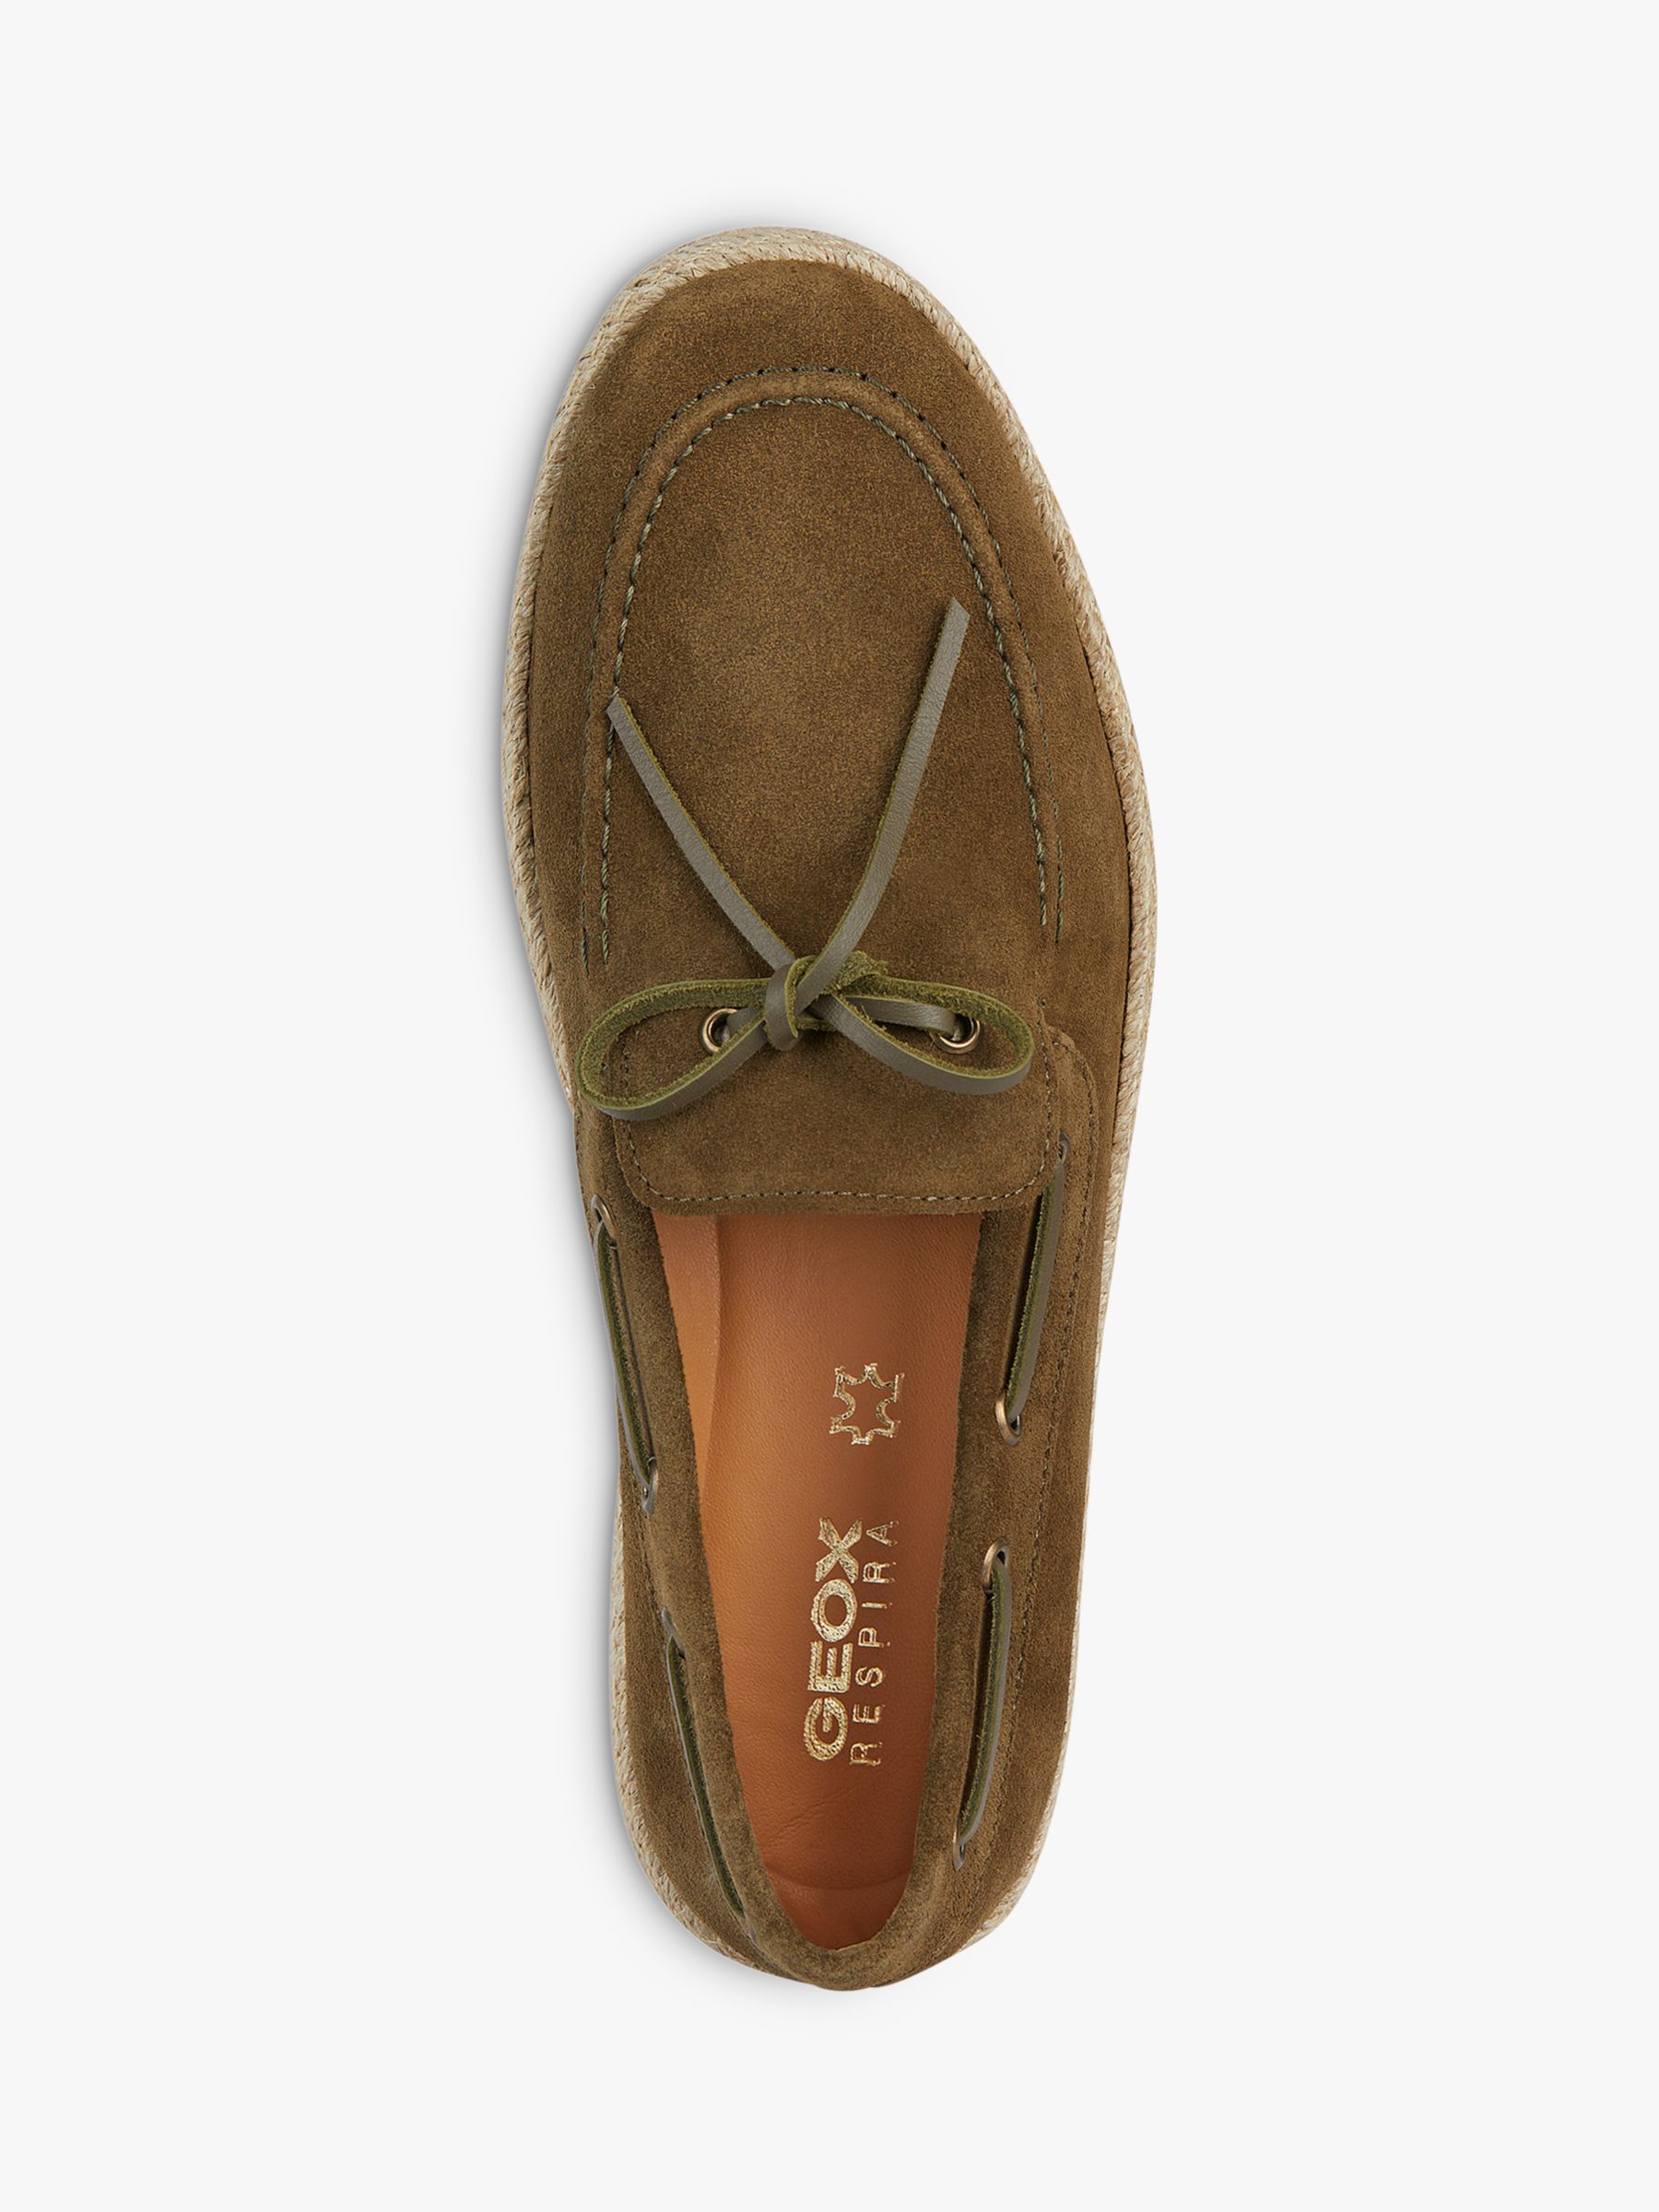 Geox Ostuni Espadrille Style Shoe, Green, EU39